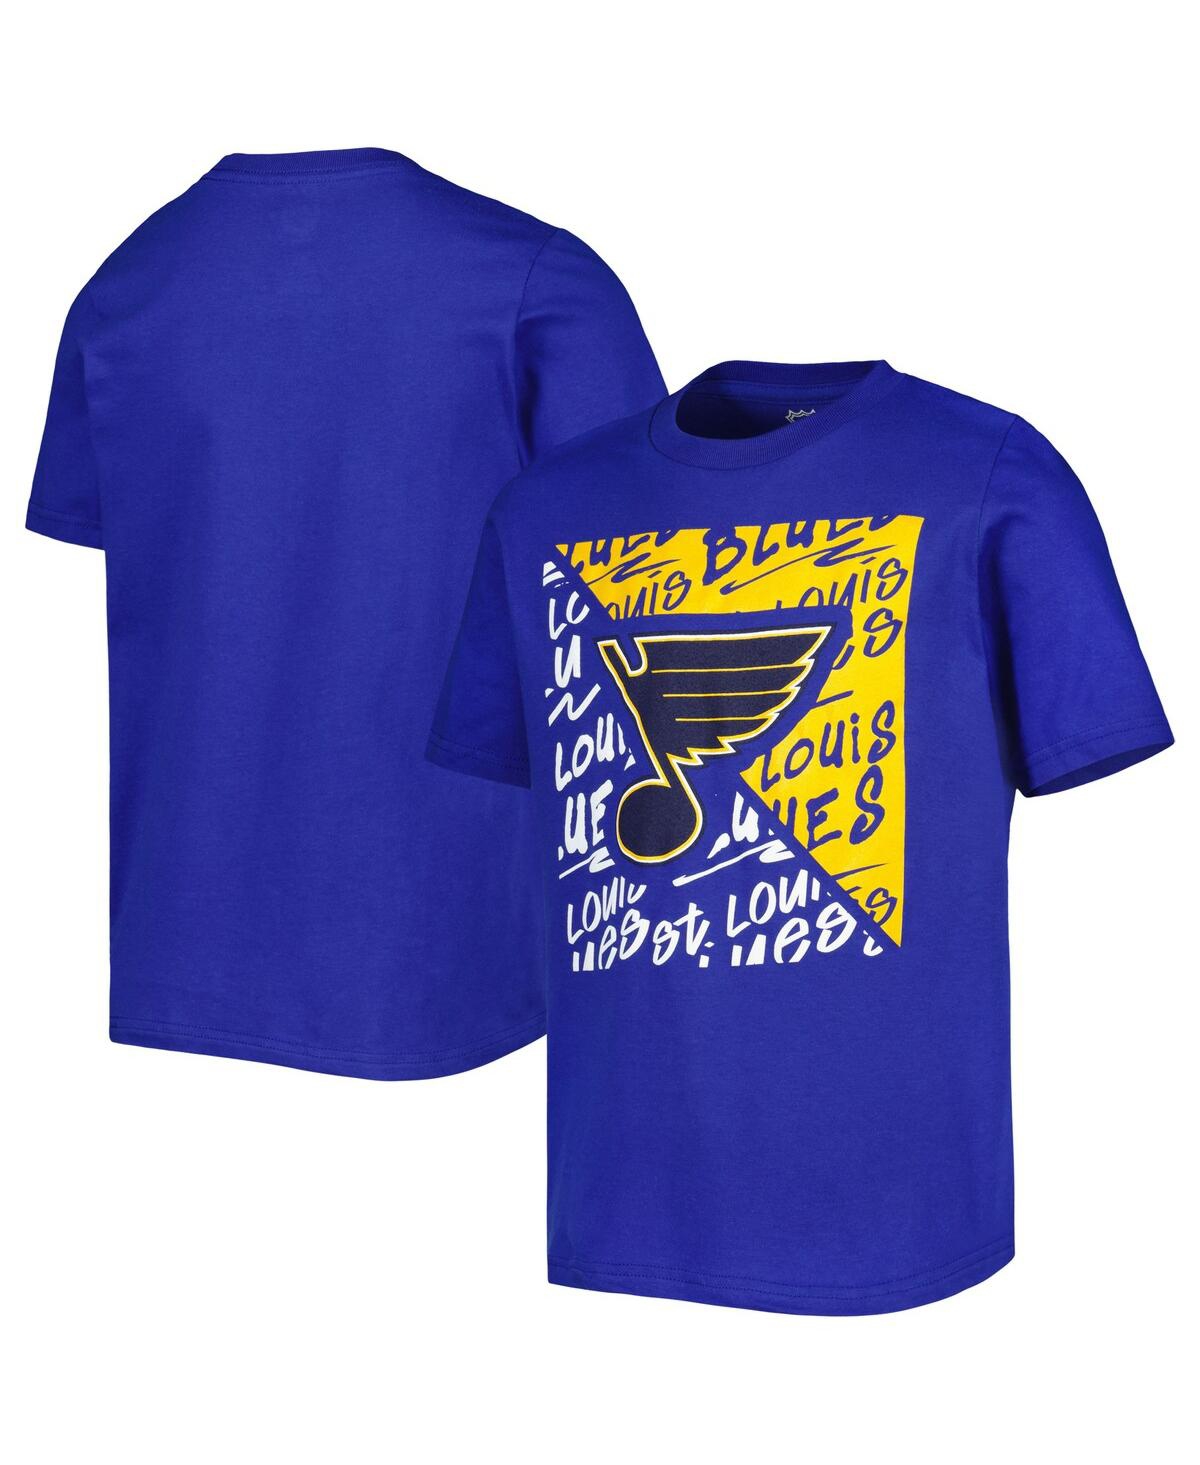 Outerstuff Kids' Big Boys And Girls Royal St. Louis Blues Divide T-shirt